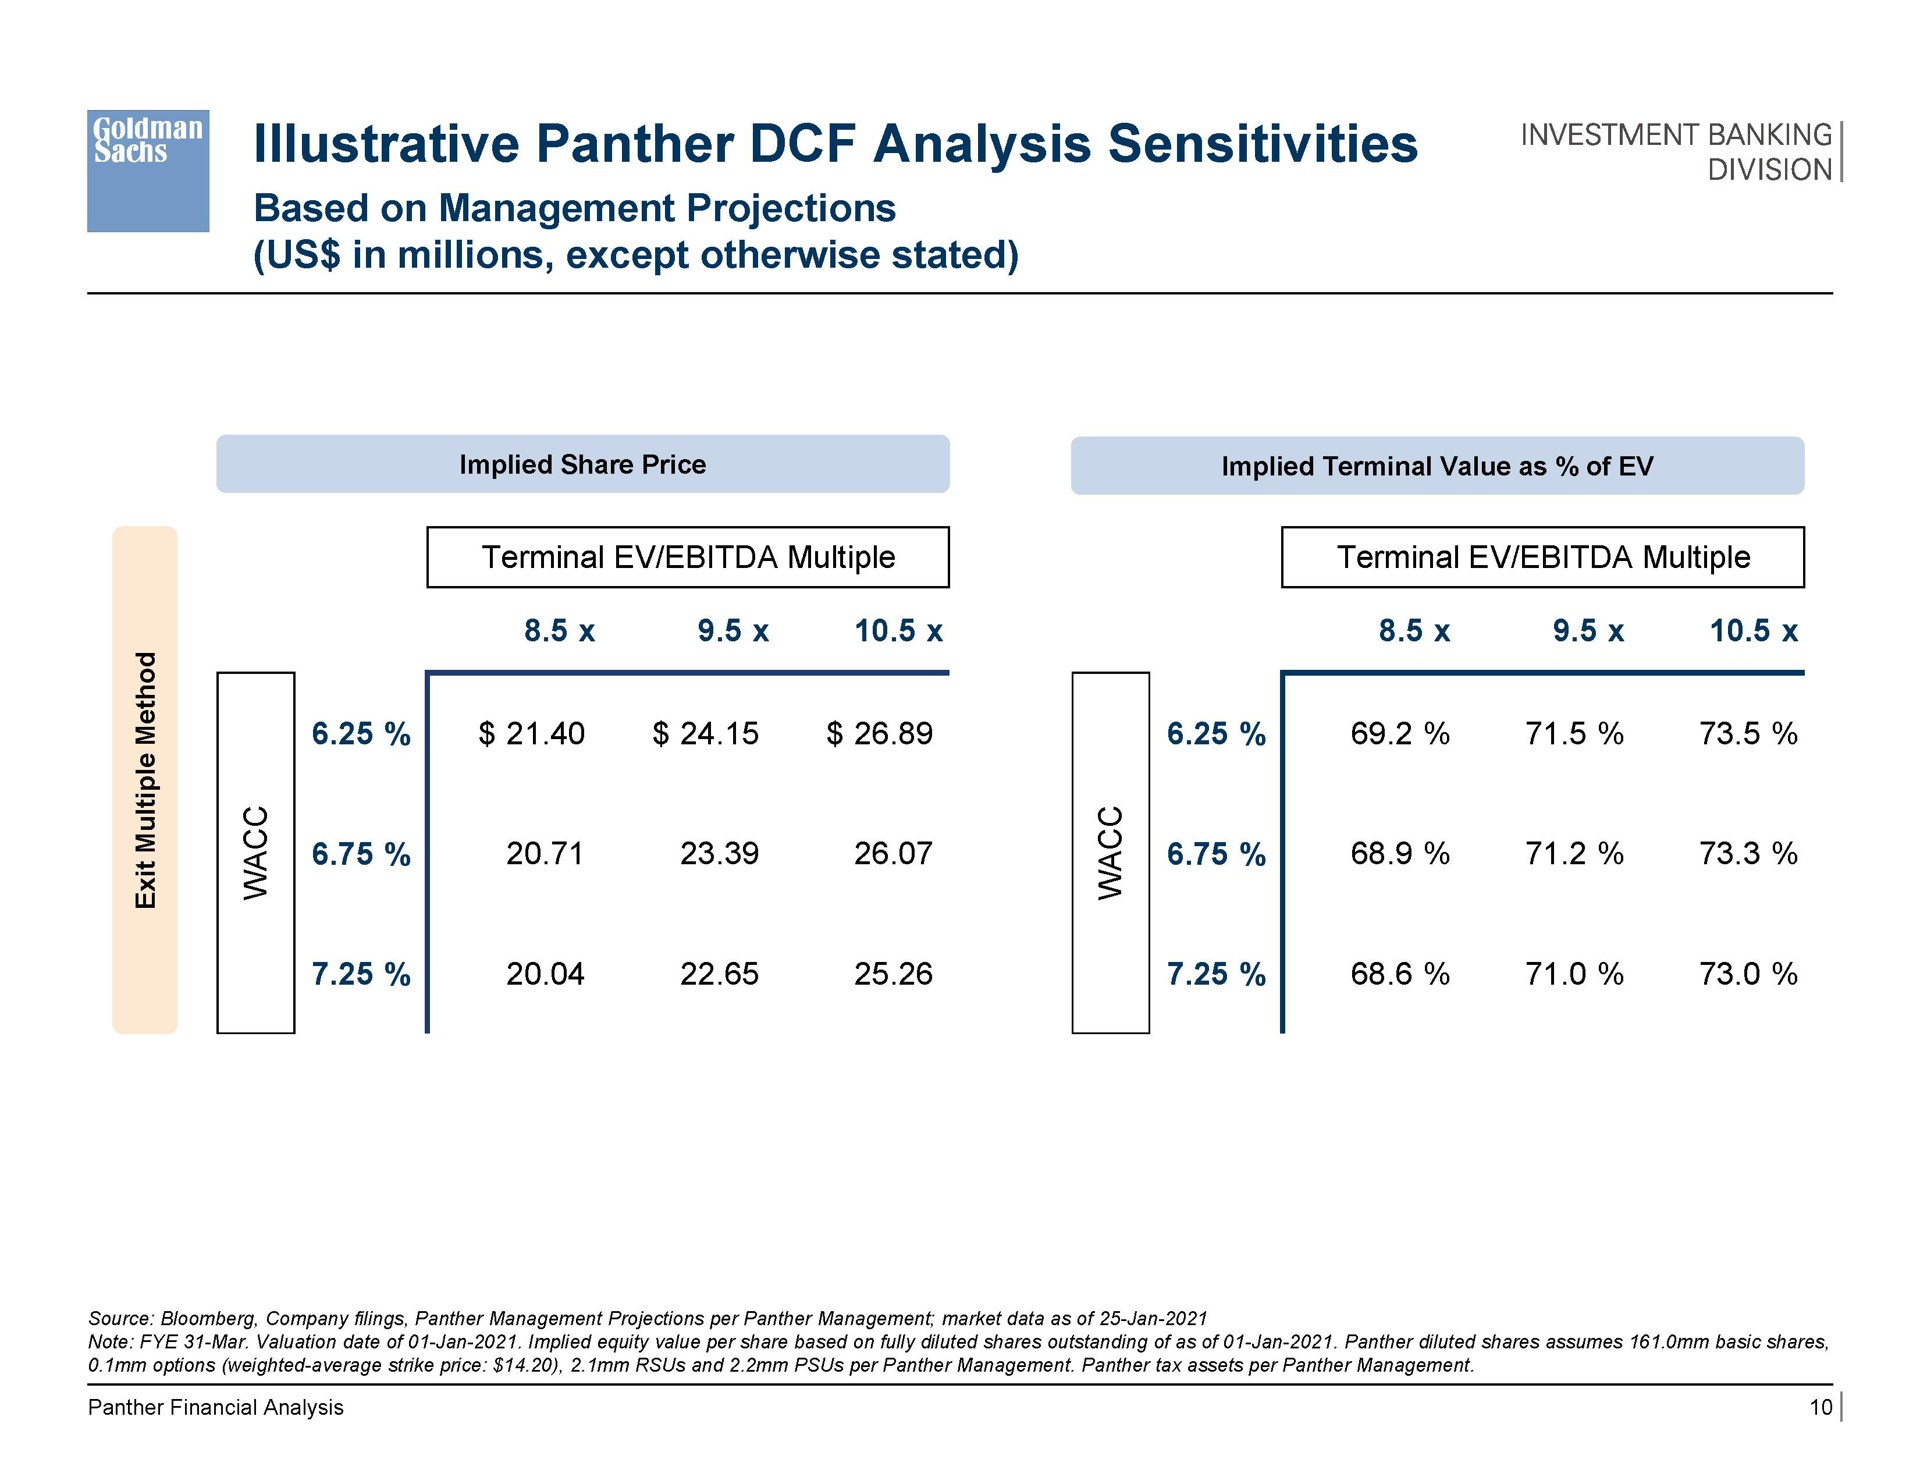 illustrative panther analysis sensitivities investment banking | Goldman Sachs